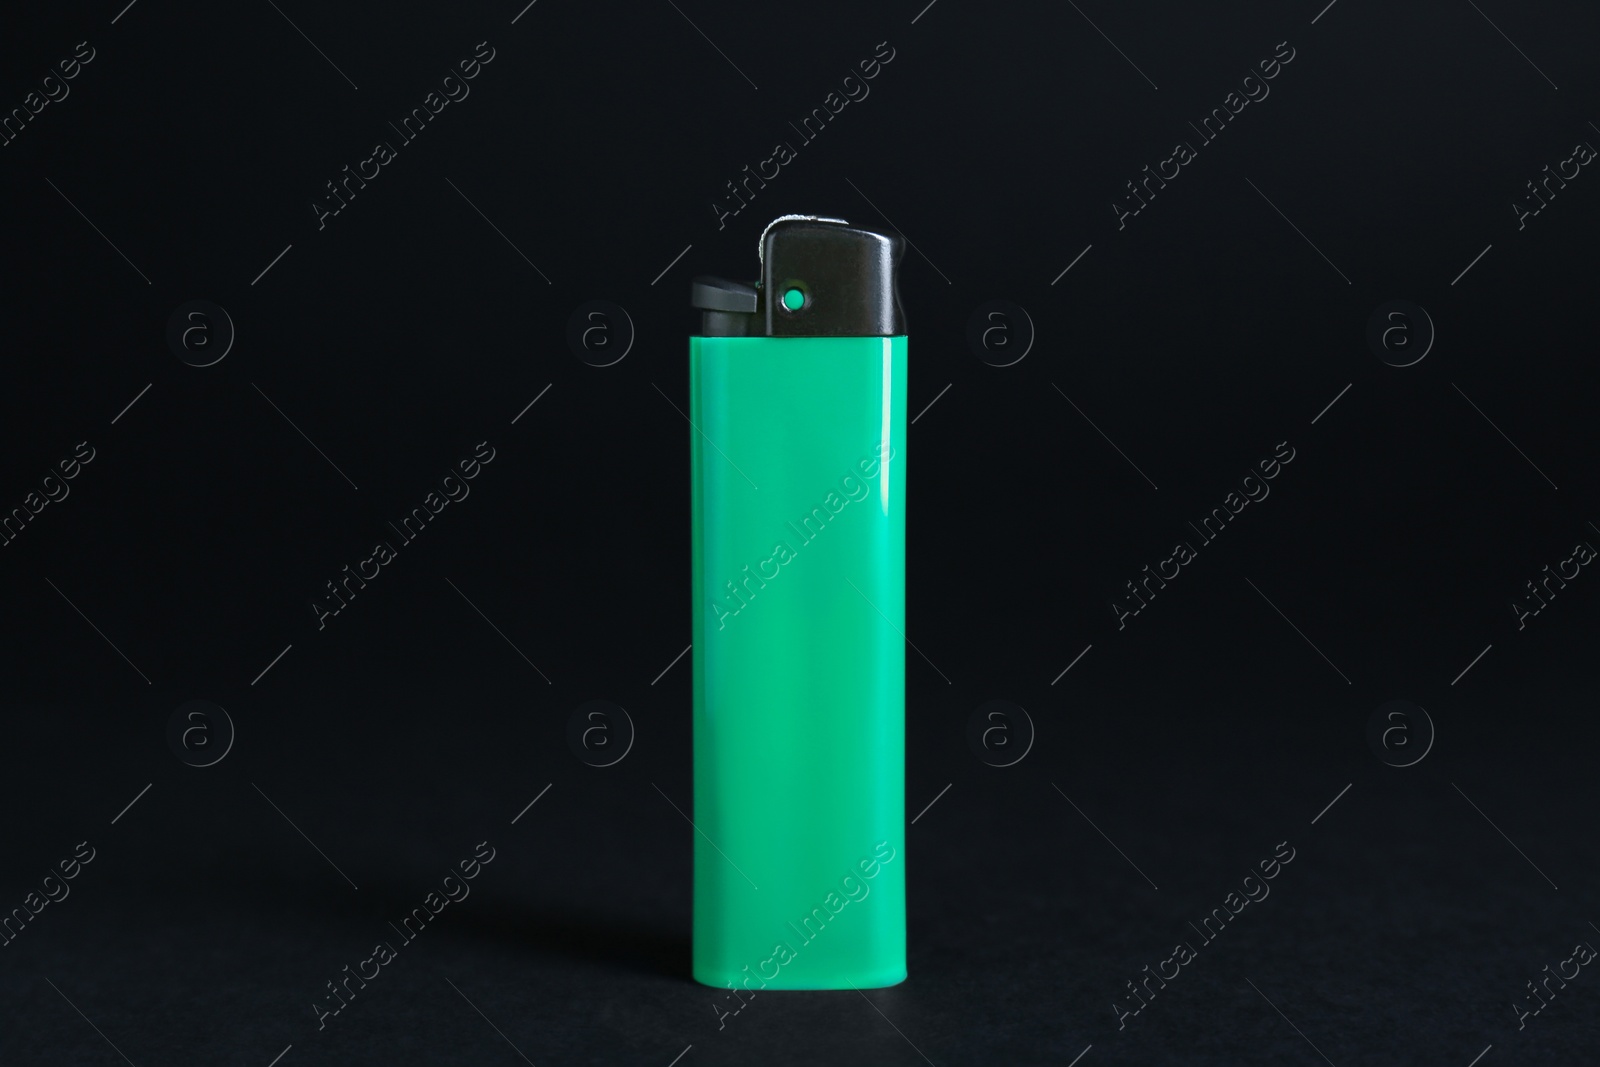 Photo of Stylish small pocket lighter on black background